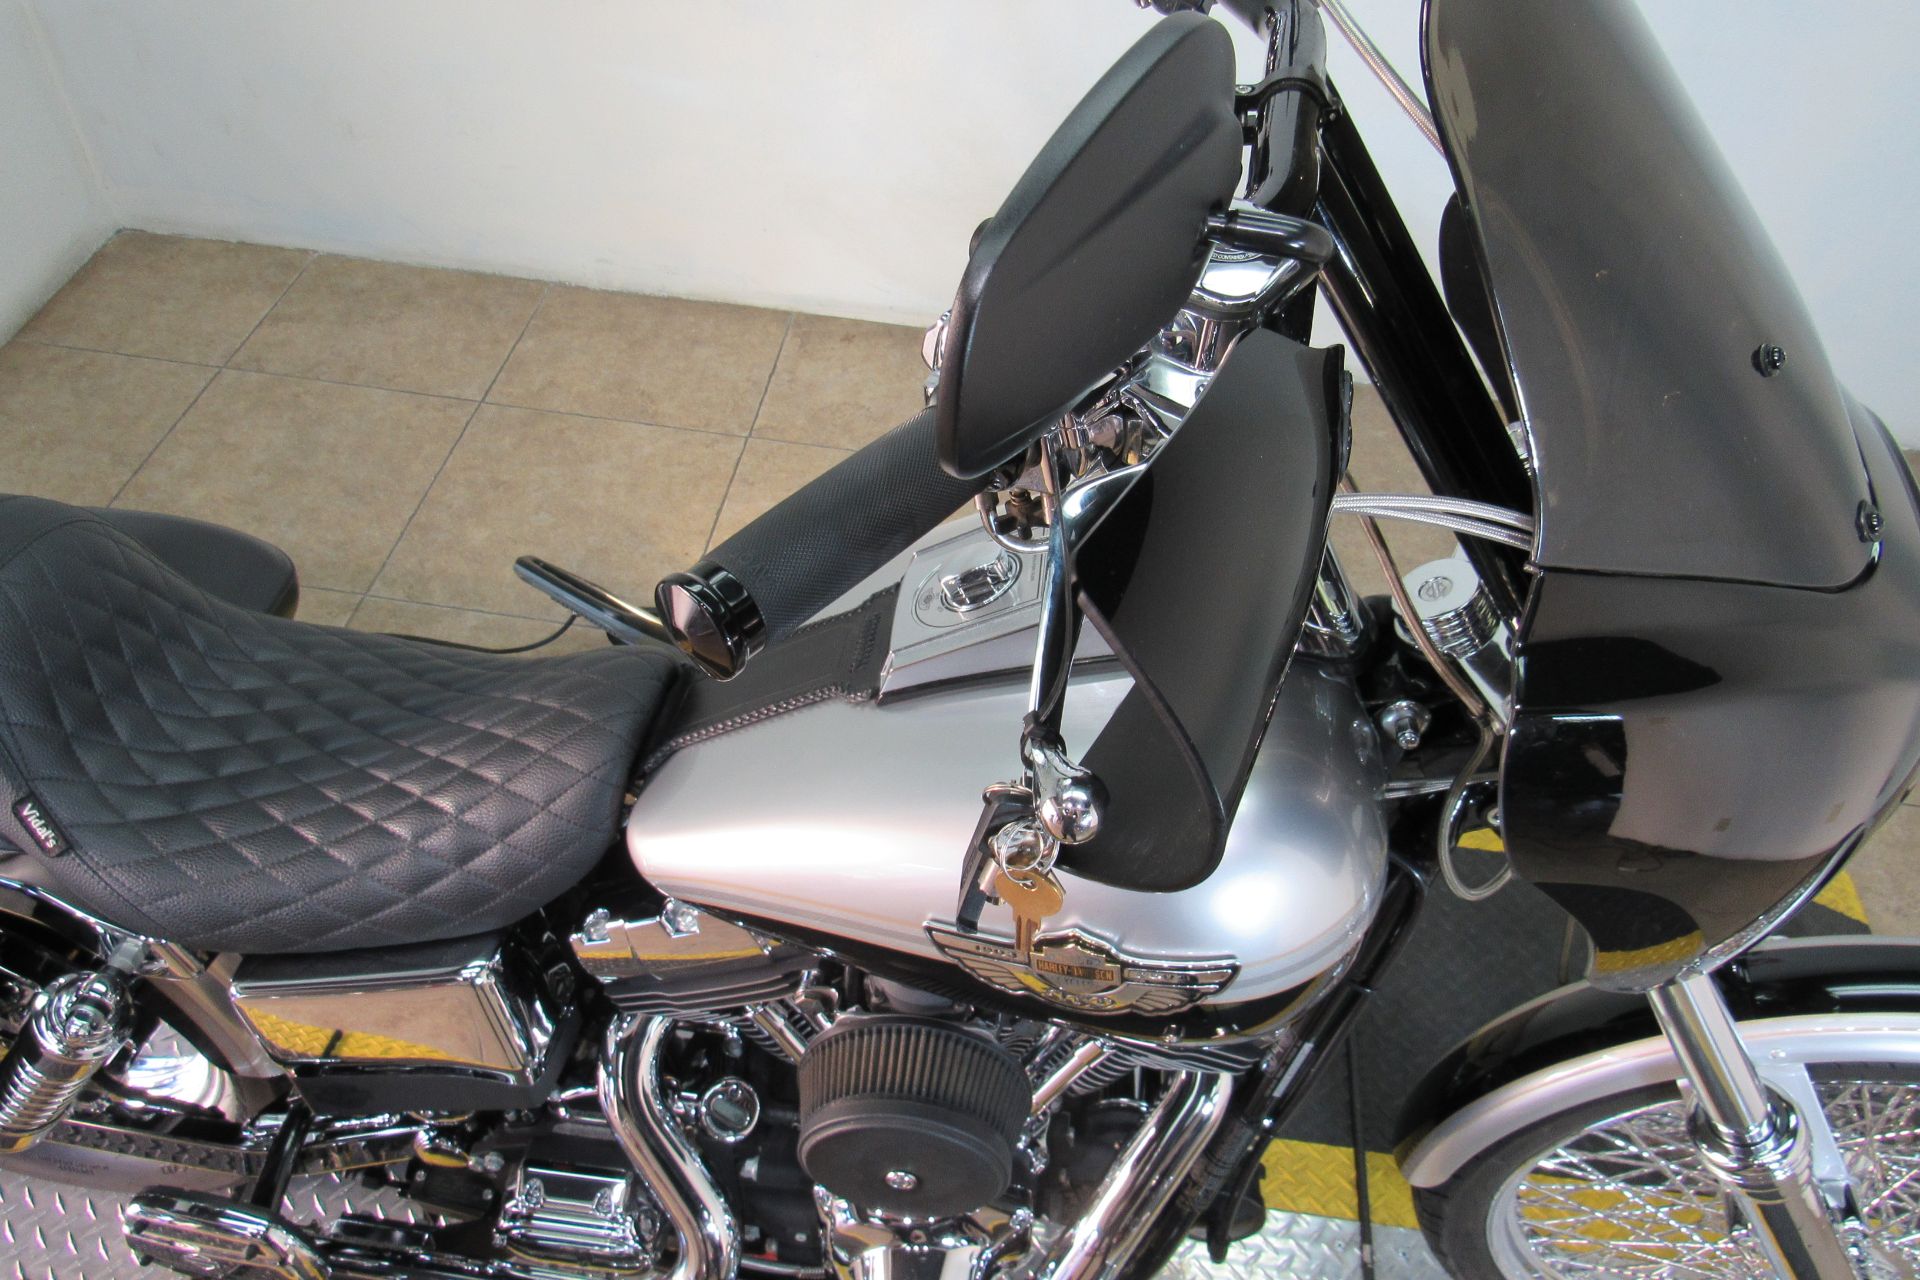 2003 Harley-Davidson FXDWG Dyna Wide Glide® in Temecula, California - Photo 24